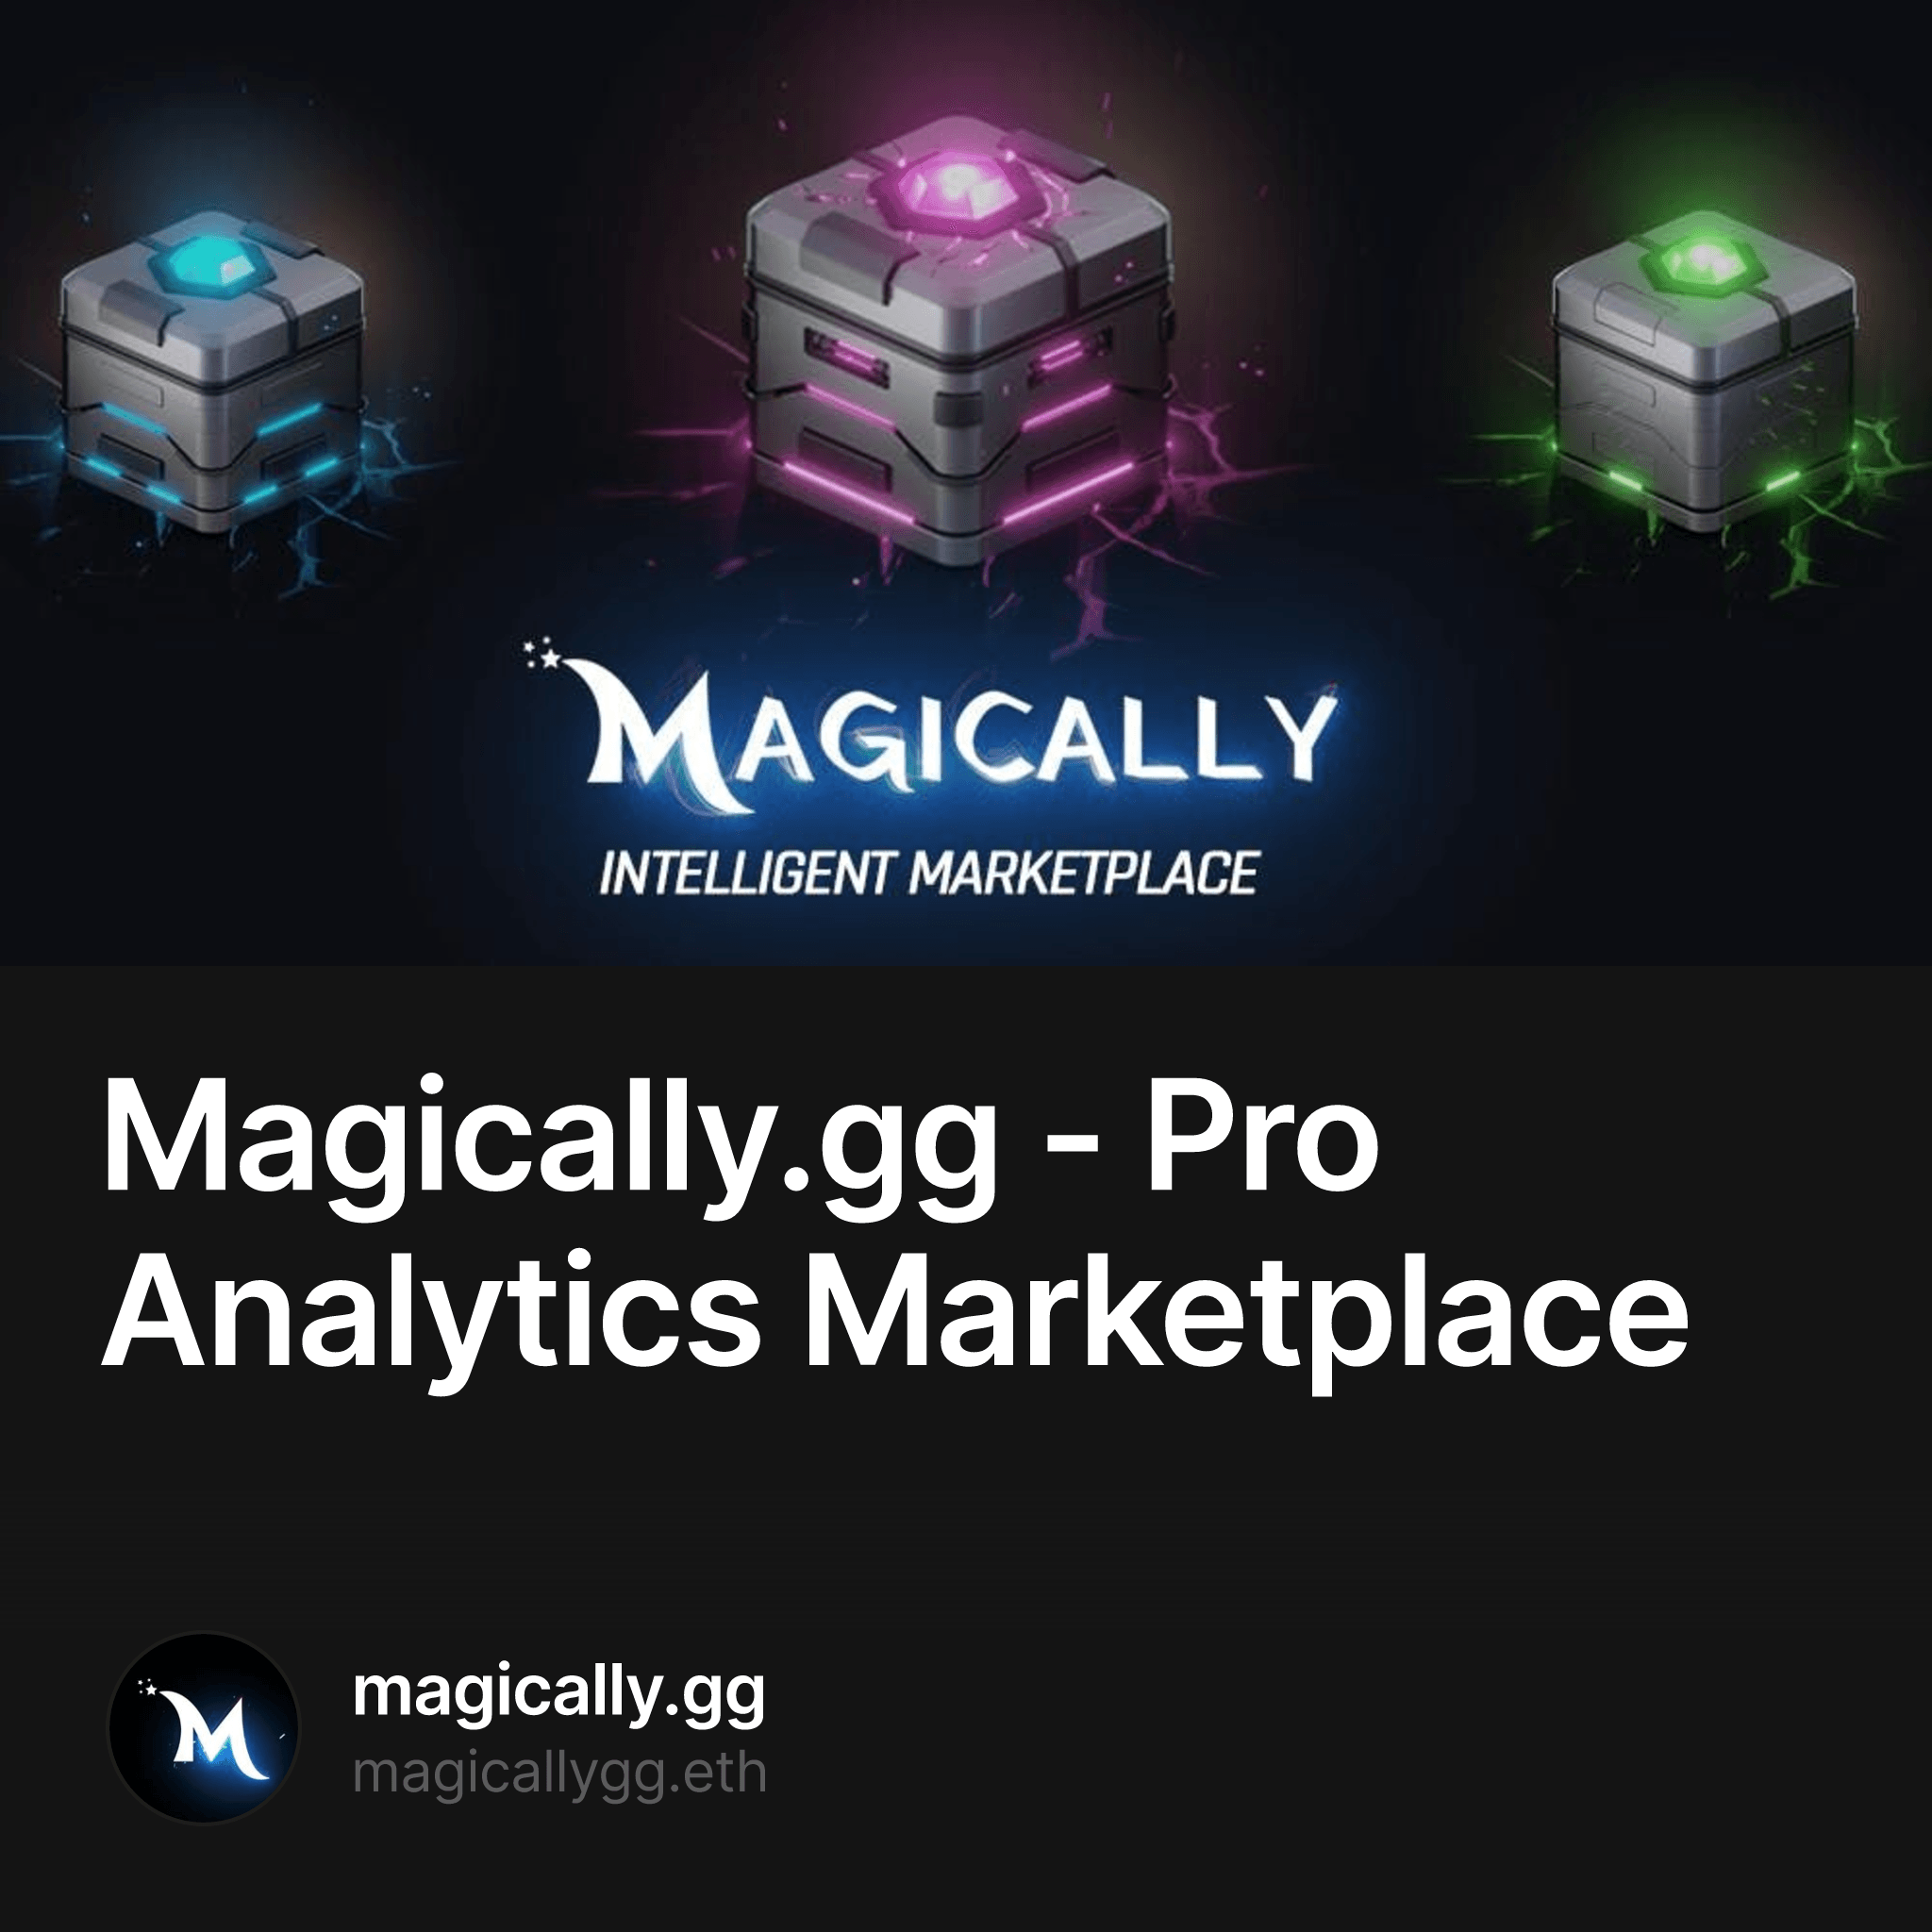 Magically.gg - Pro Analytics Marketplace 580/1000